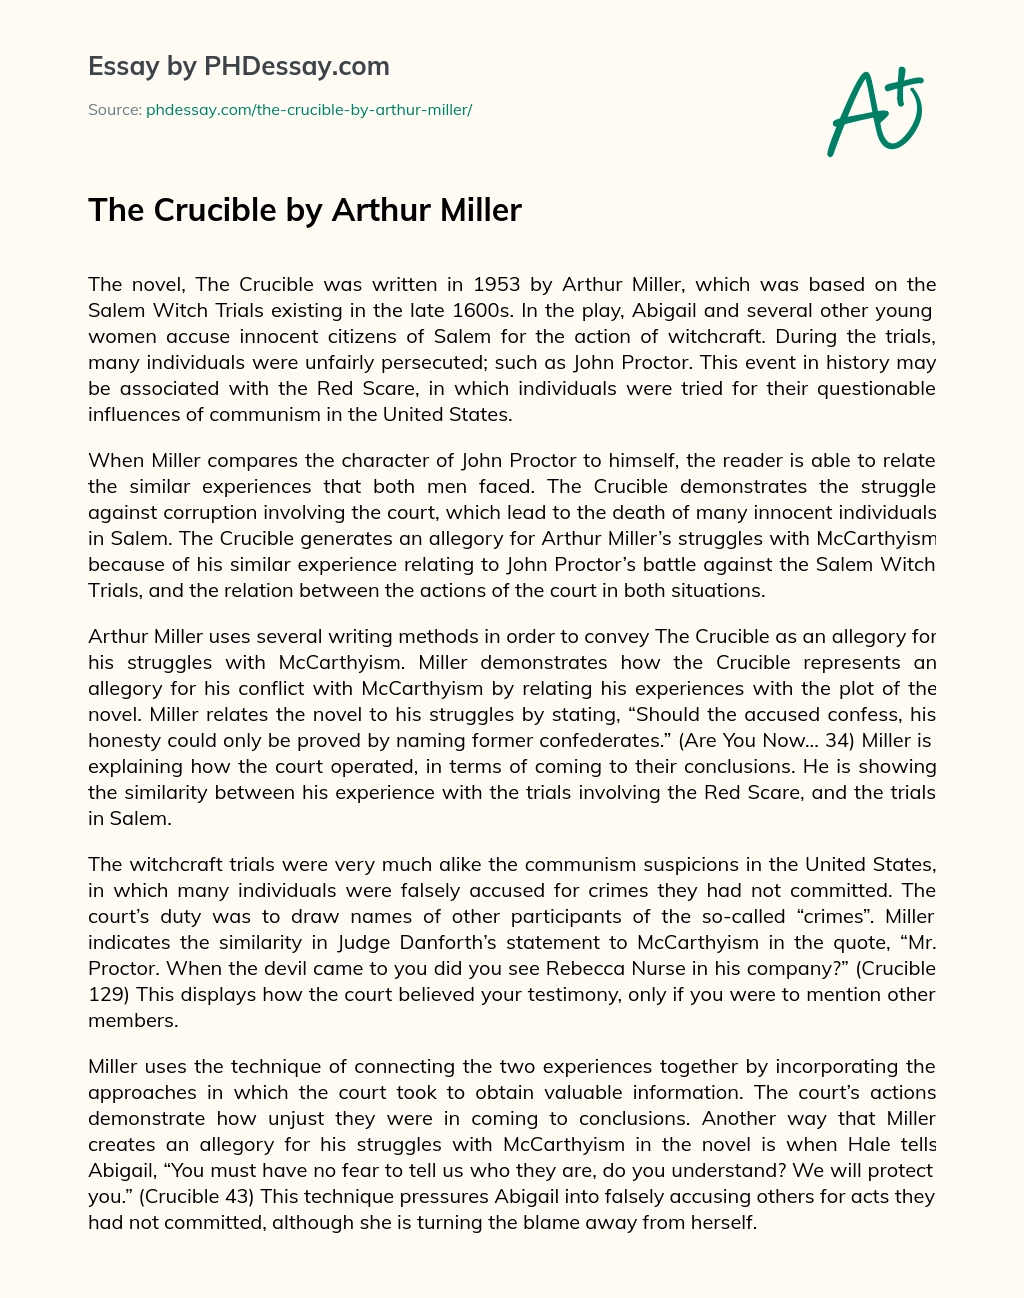 The Crucible by Arthur Miller essay